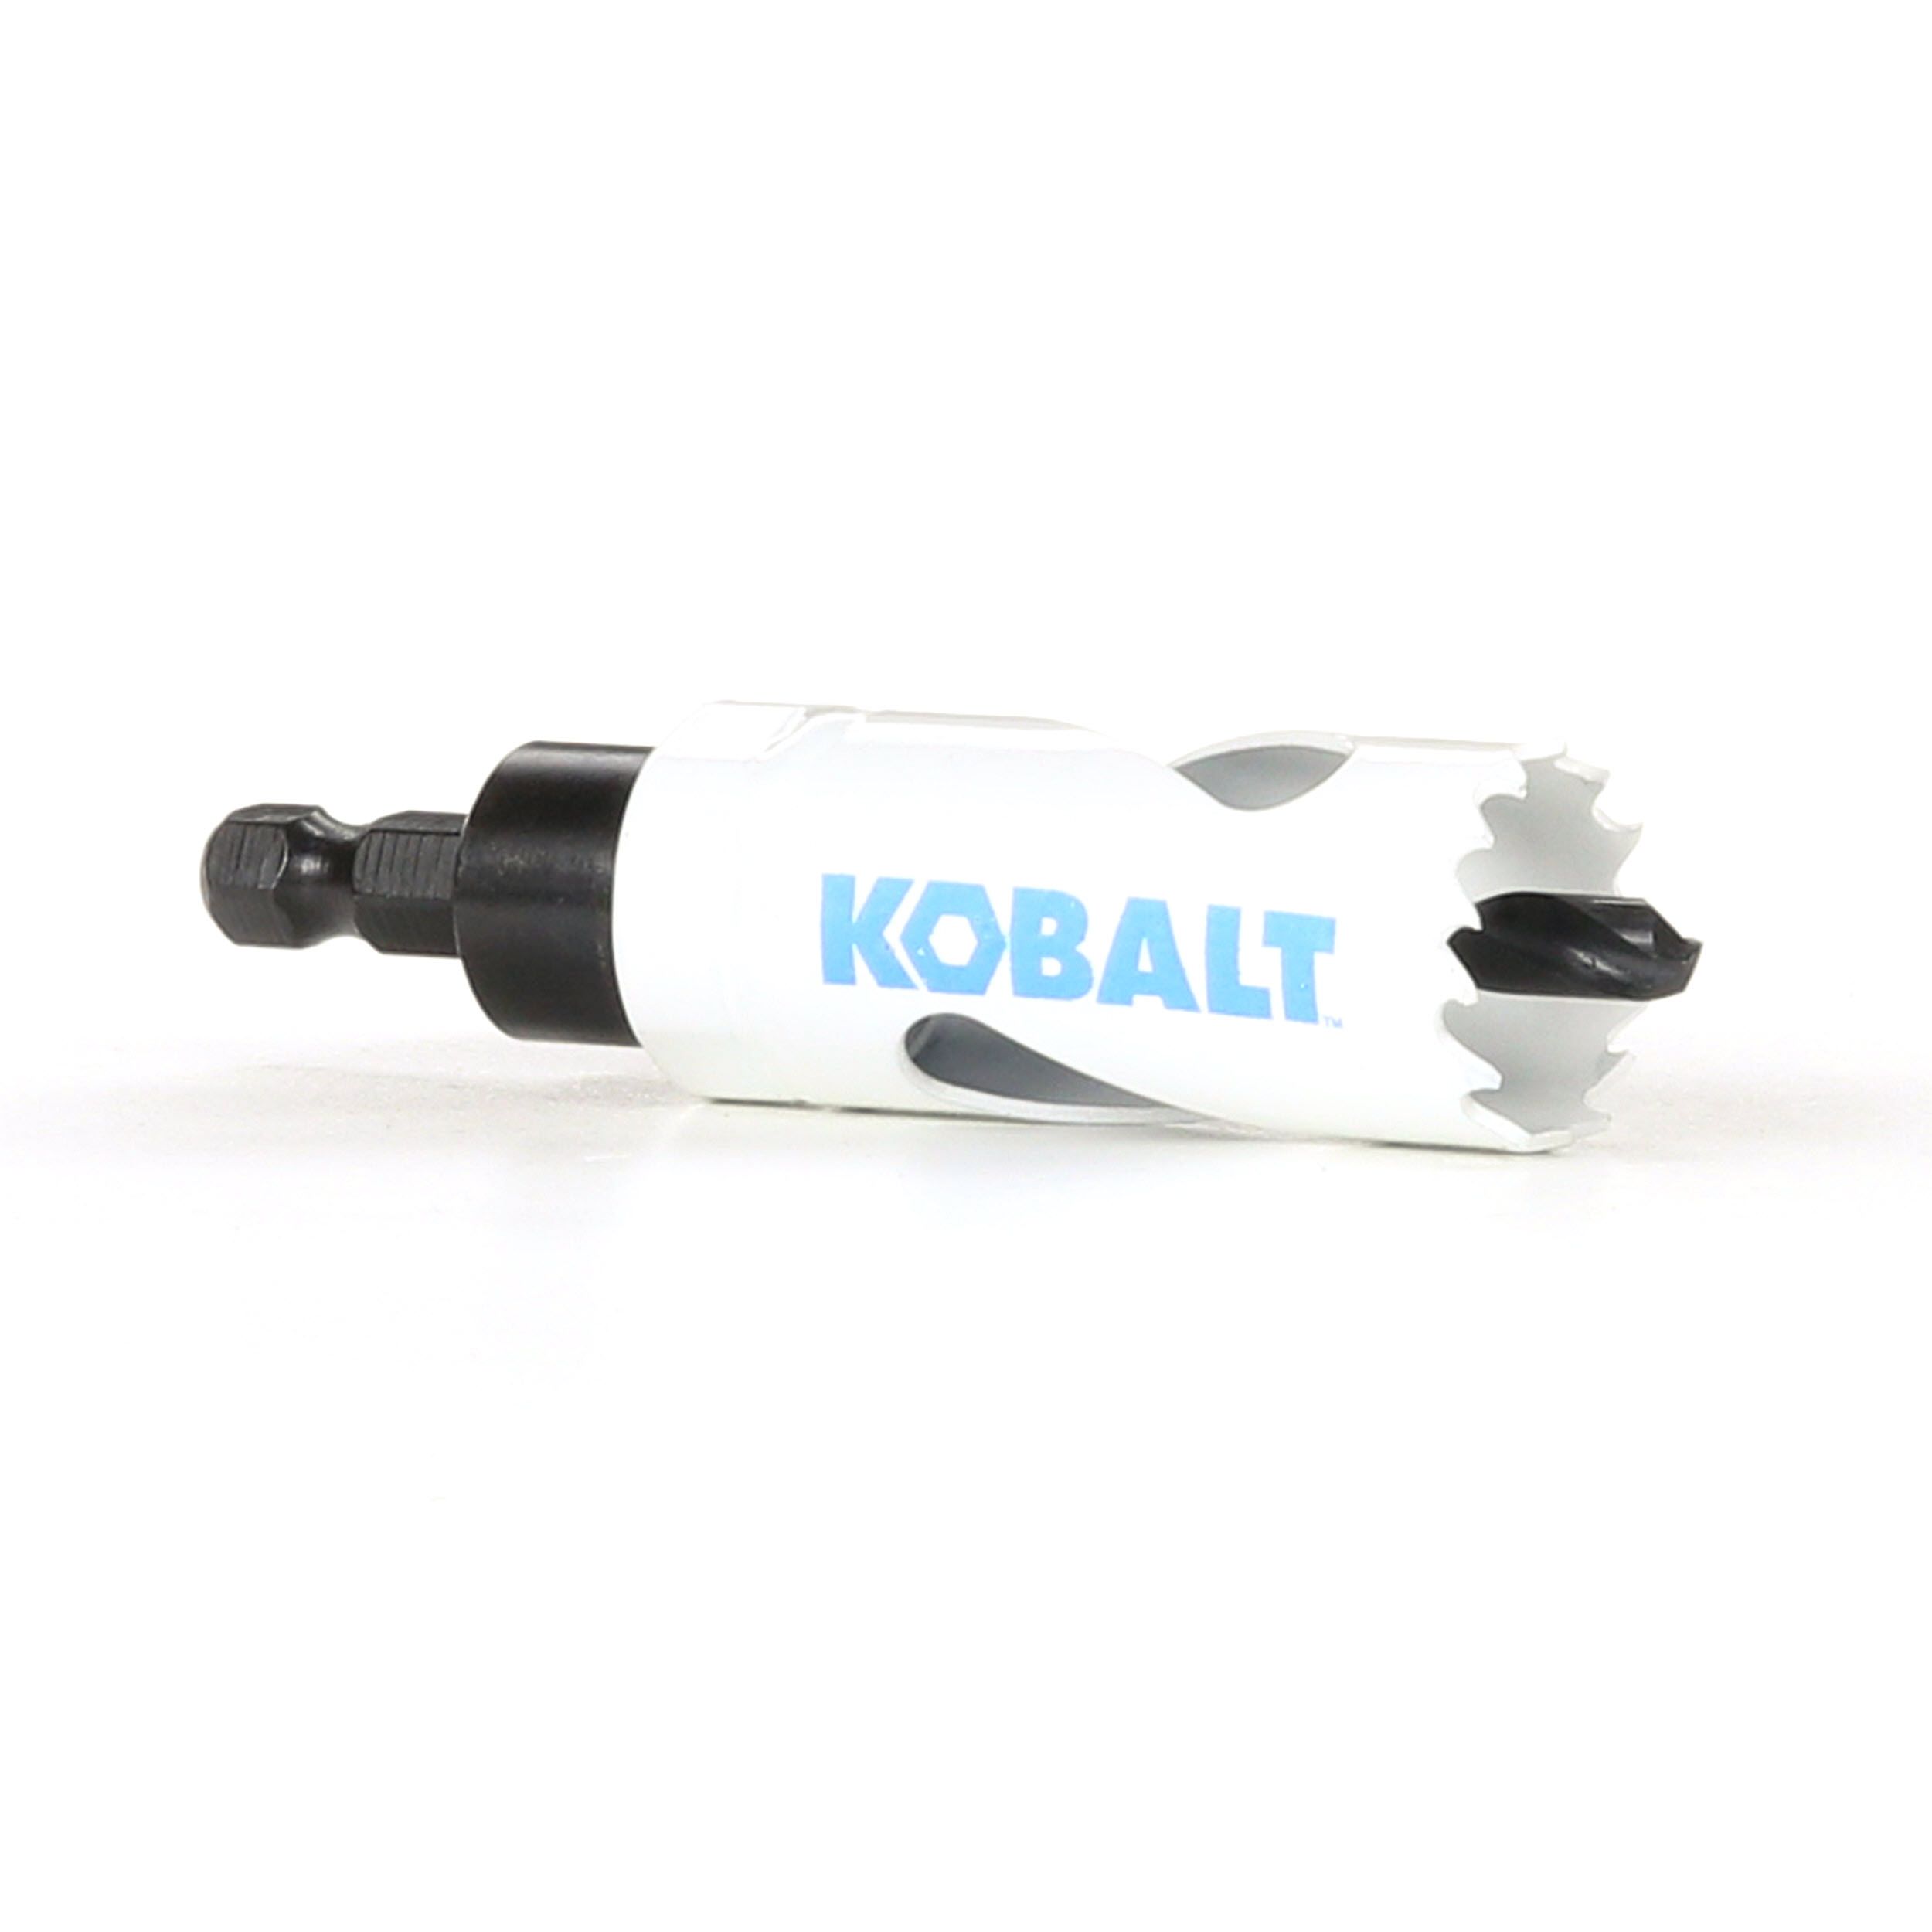 Kobalt 1 Inch Bi-metal Arbored Hole Saw 777733 for sale online 